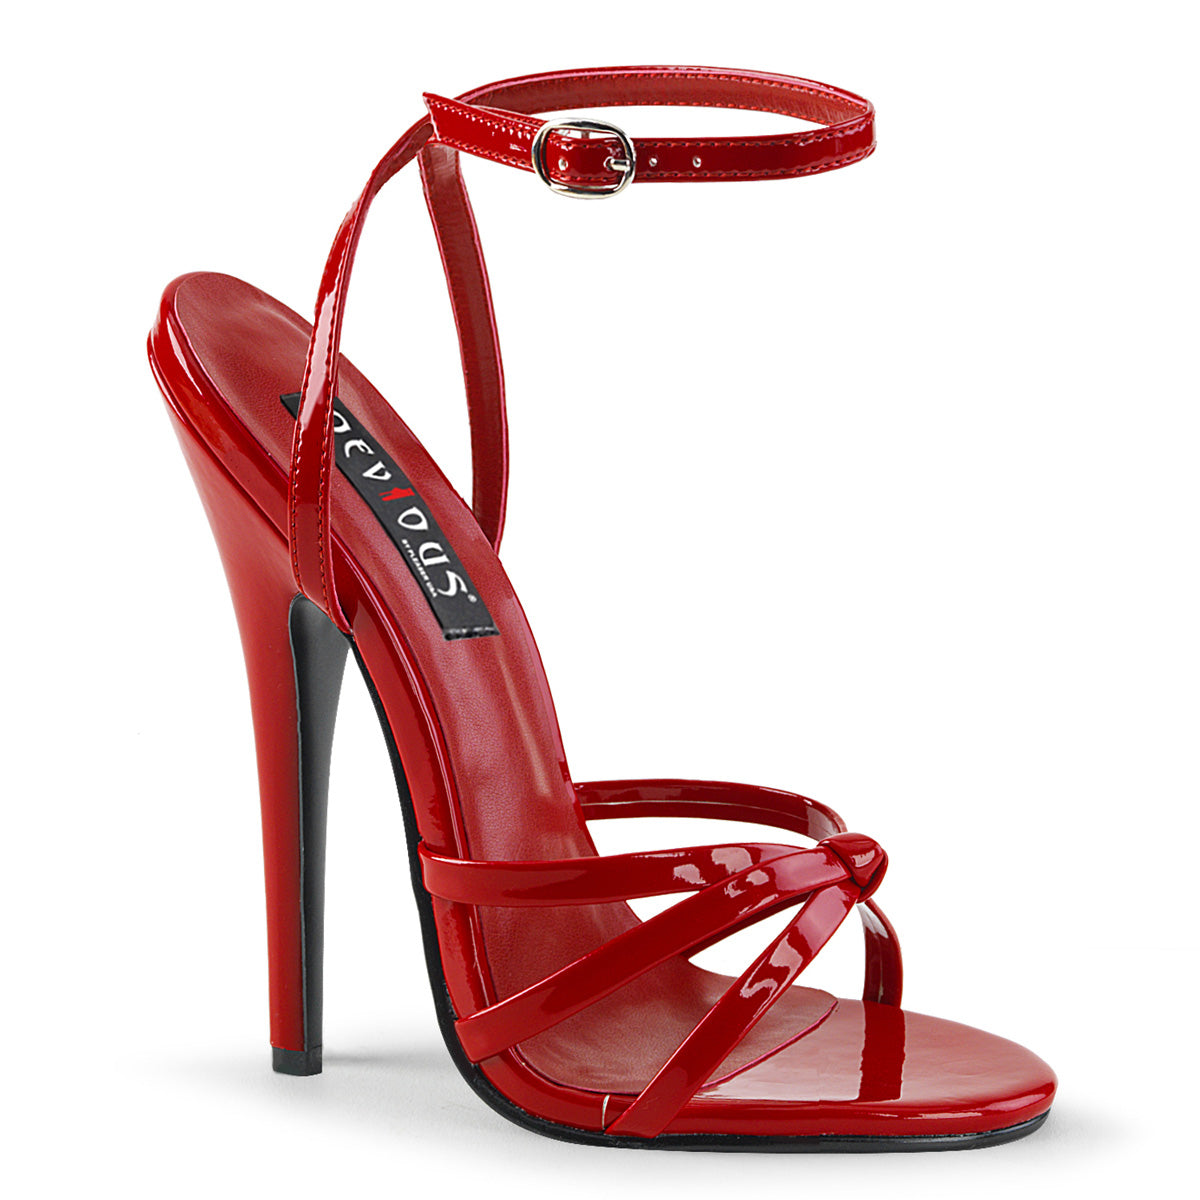 DOMINA-108 Red 6 Inch Heel Sandals